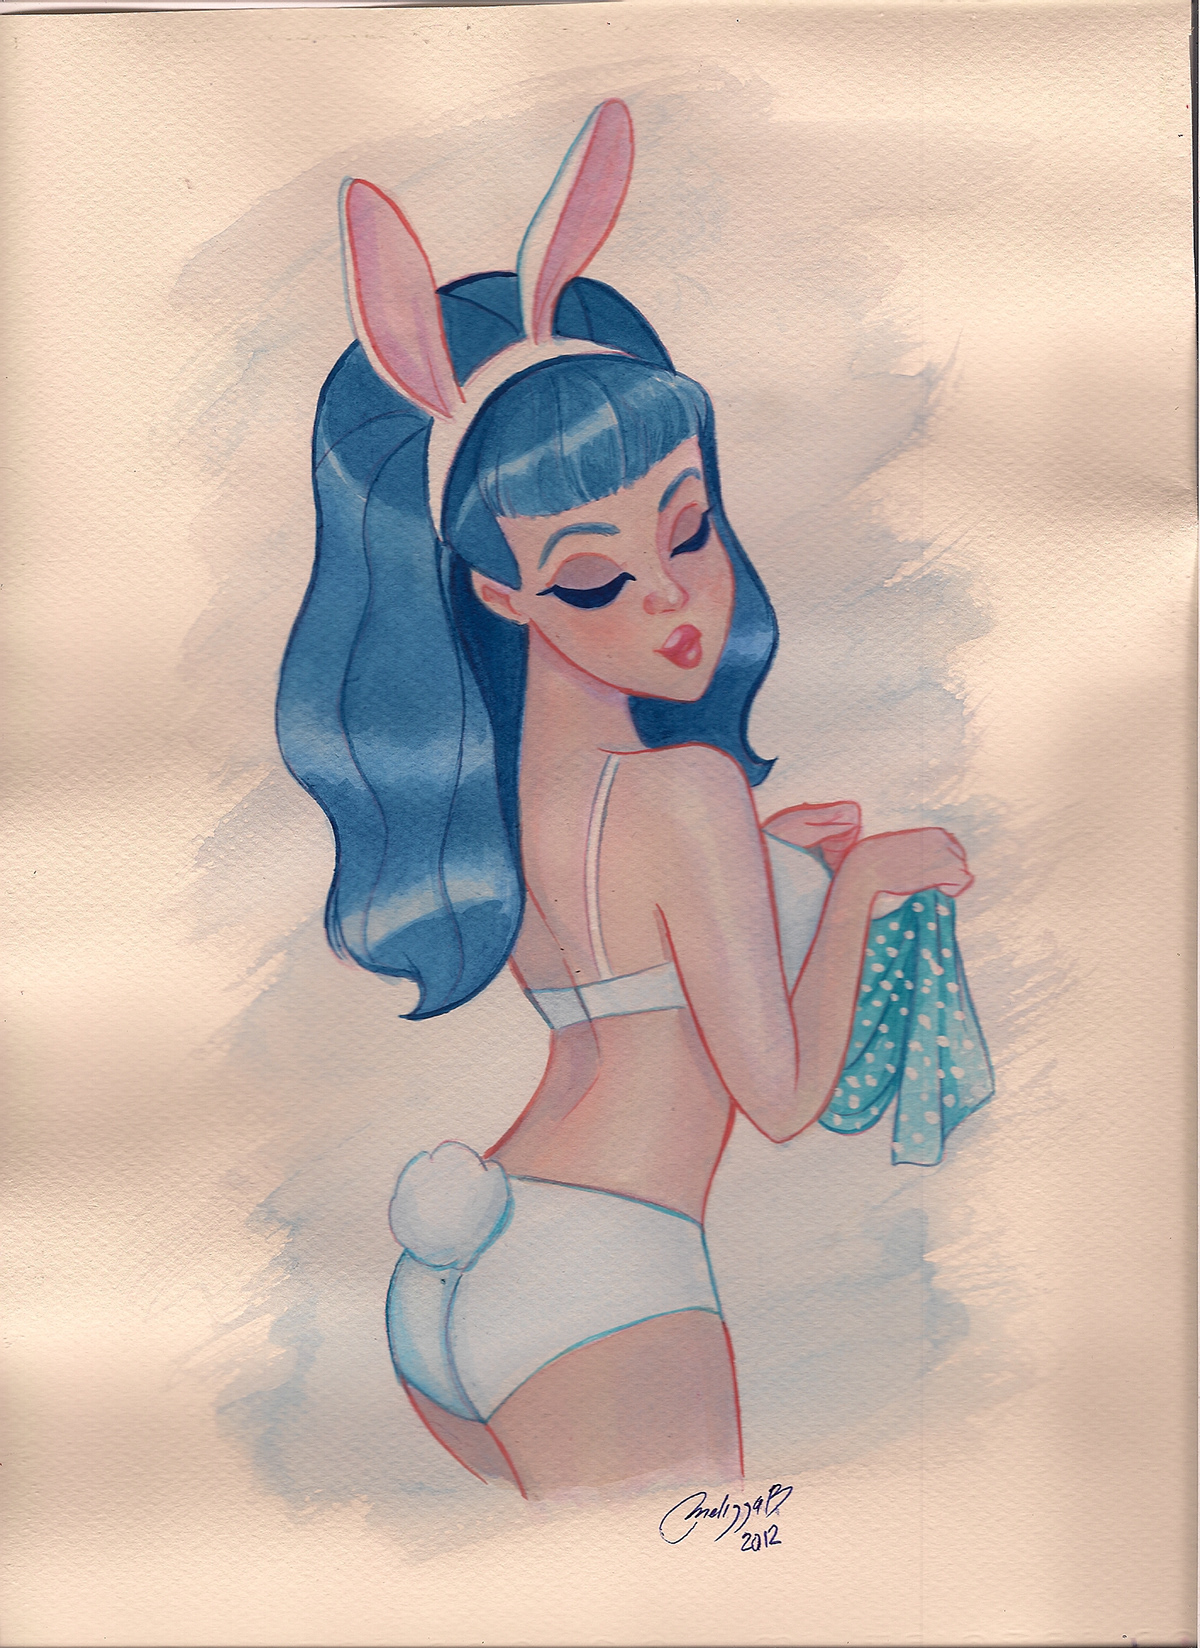 little sexy blue bunny melivillosa pin up watercolors TRADITIONAL ART play boy melissa ballesteros p art